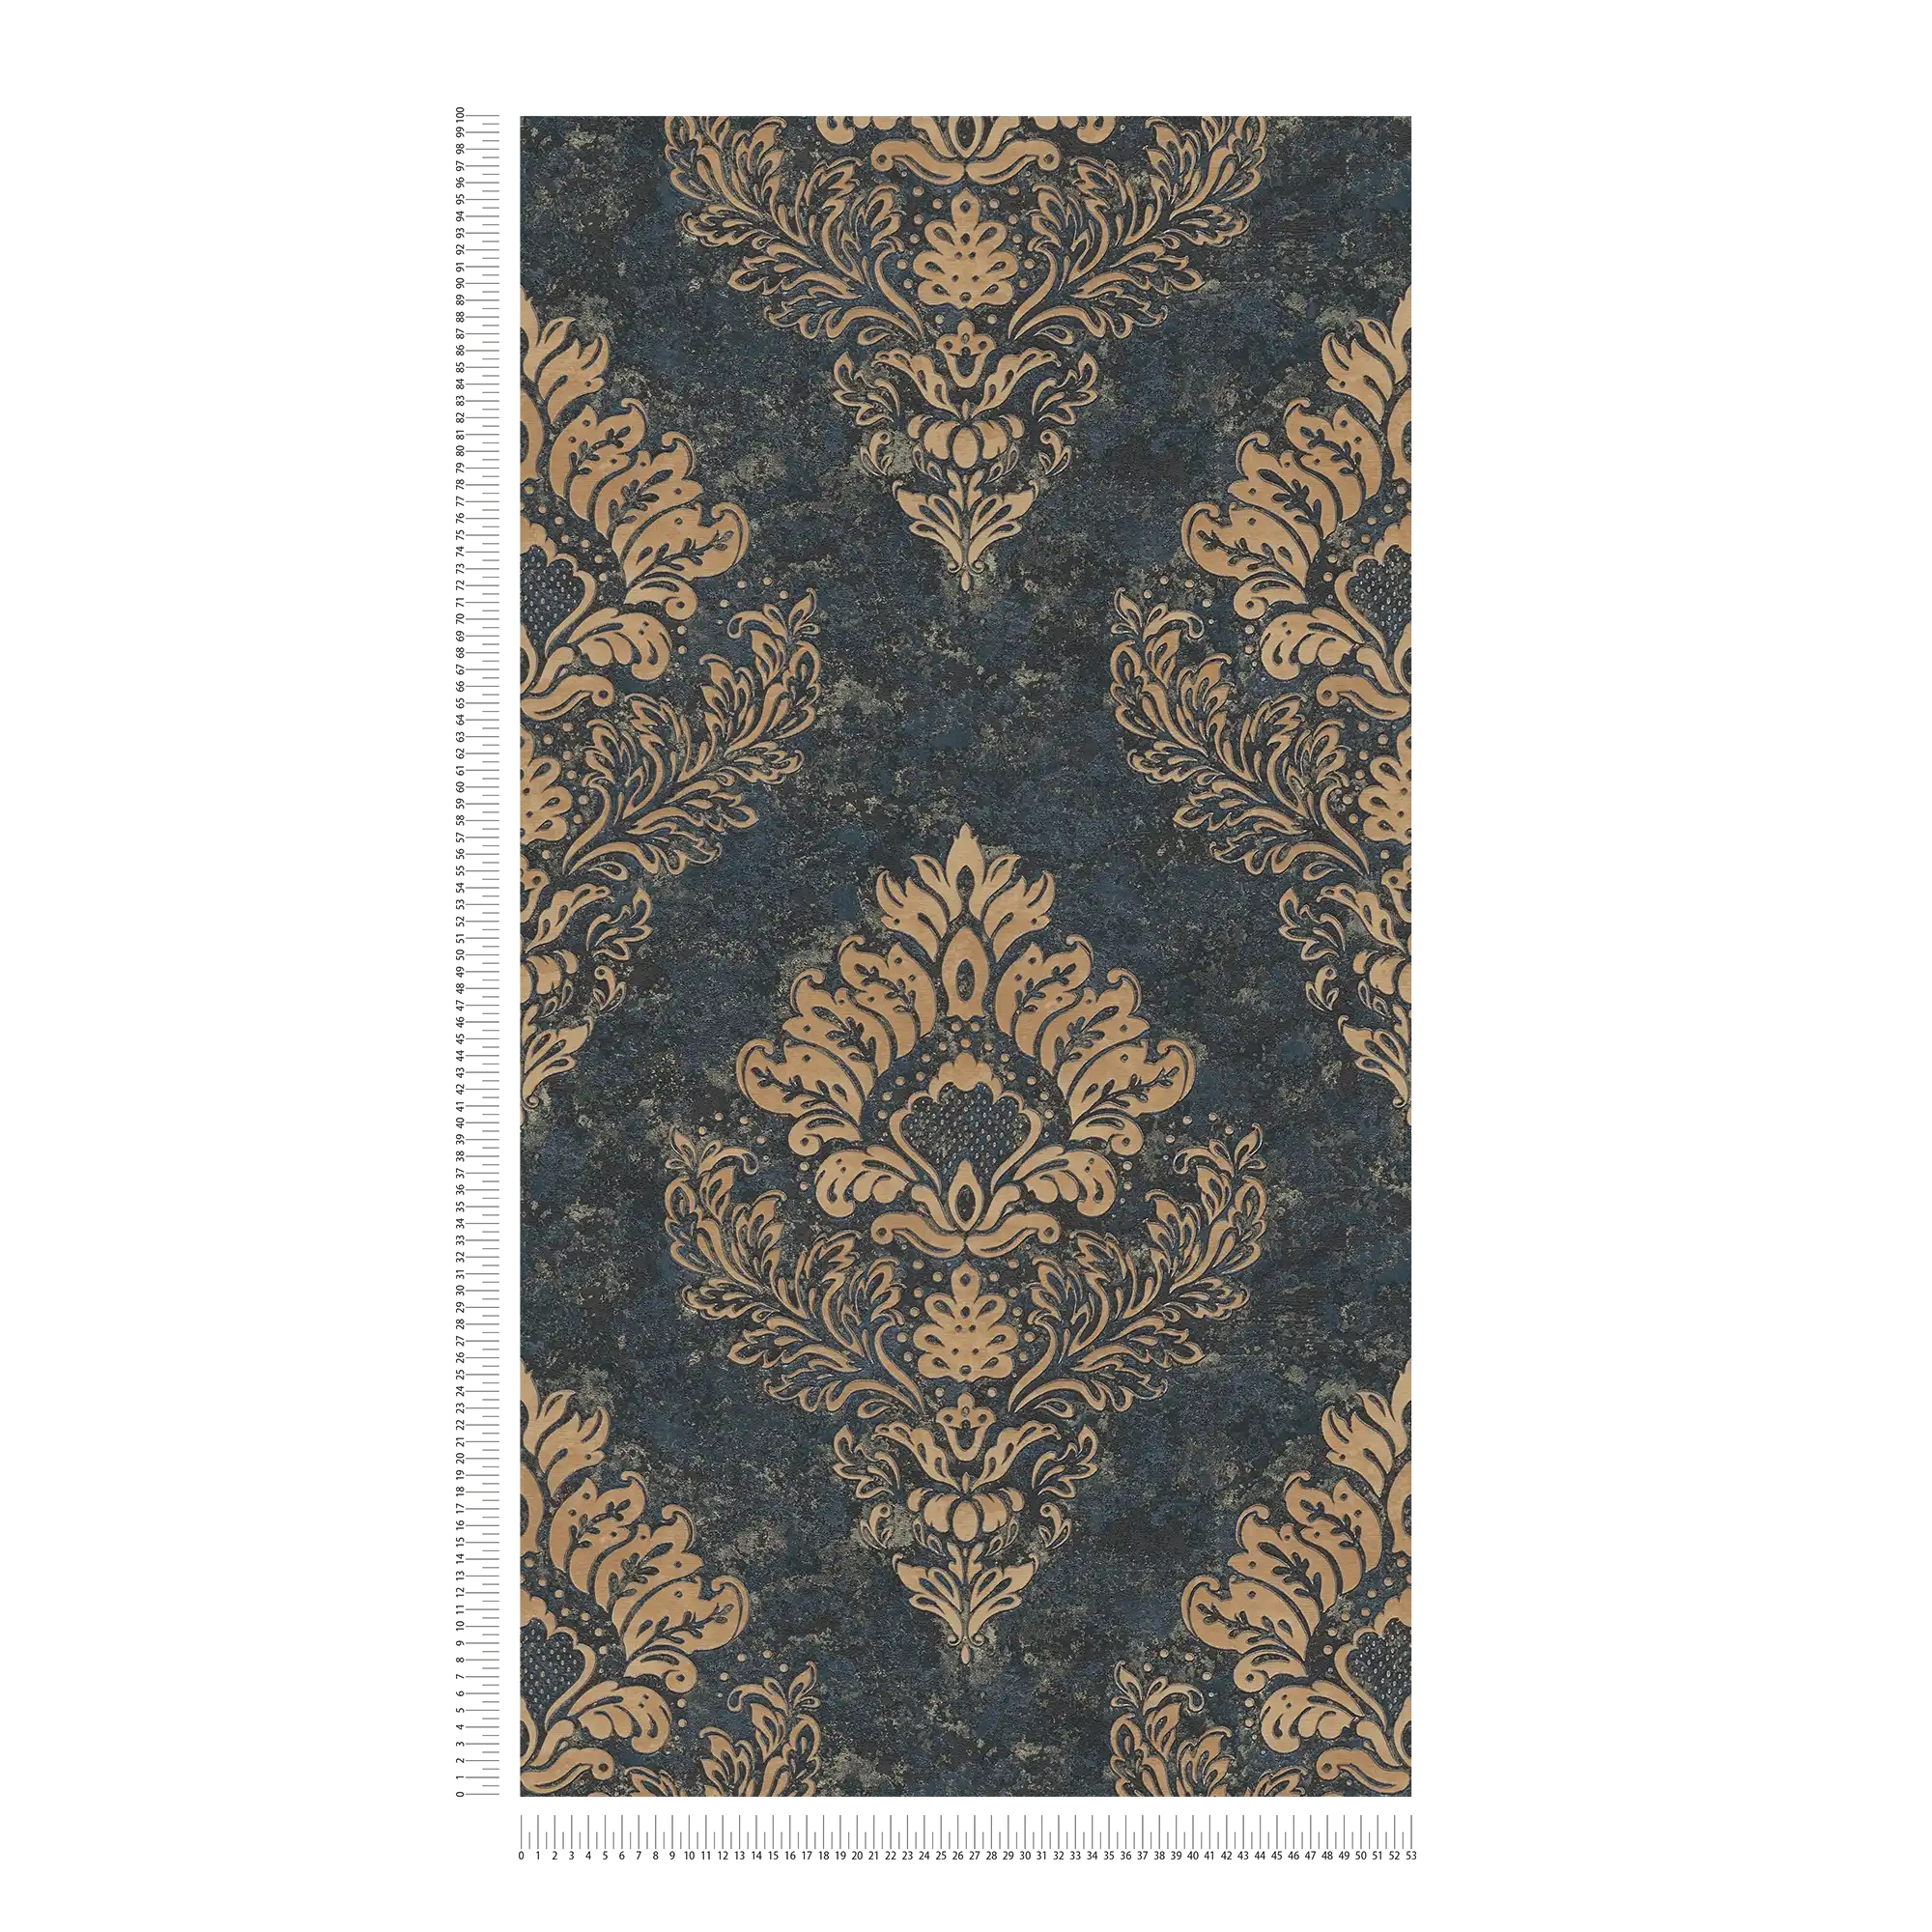             Ornamenttapete mit floralem Stil & Gold-Effekt – Beige, Blau, Braun
        